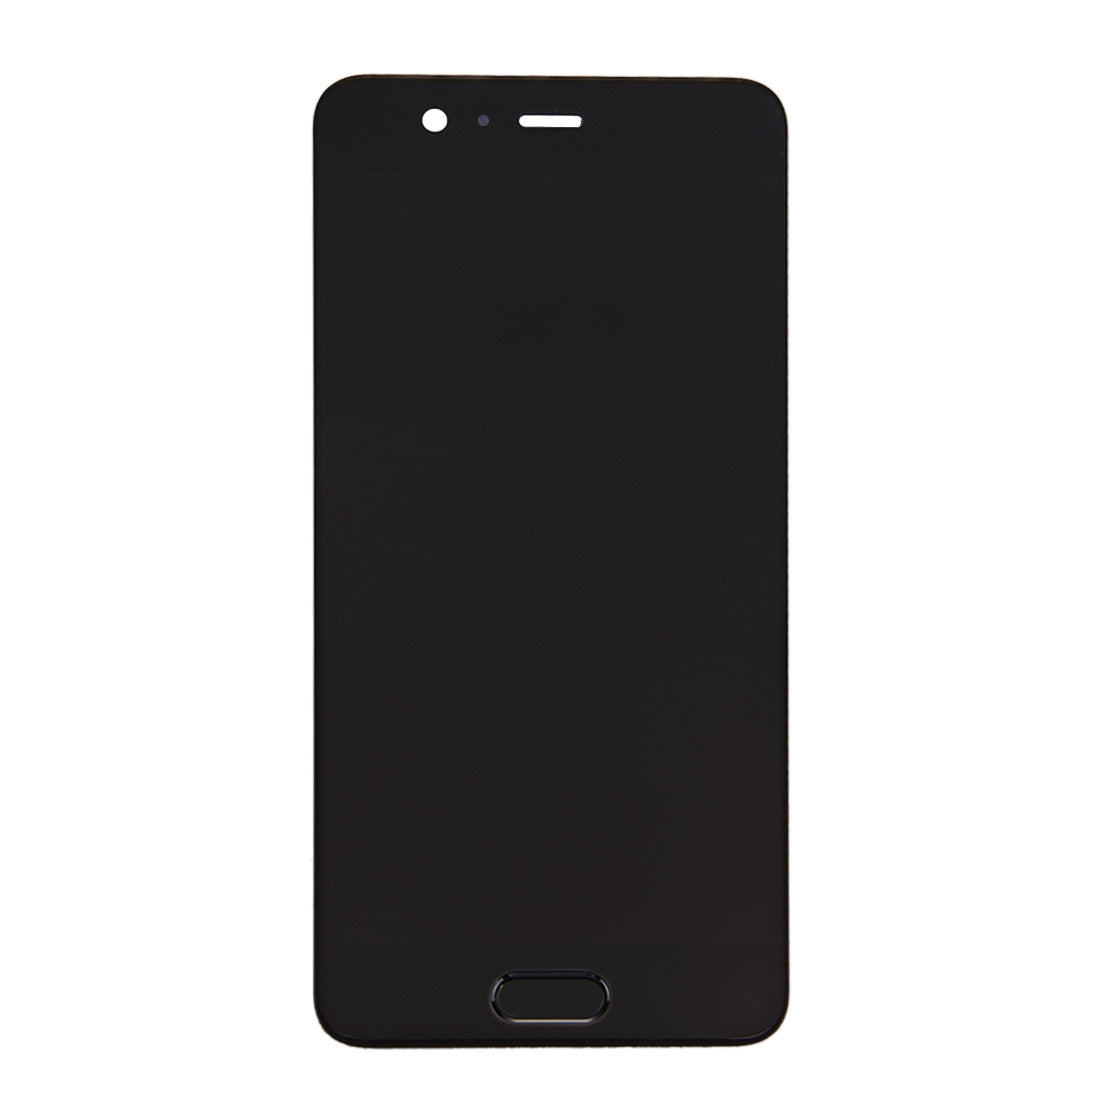 Ecran LCD + Vitre Tactile Huawei P10 Noir